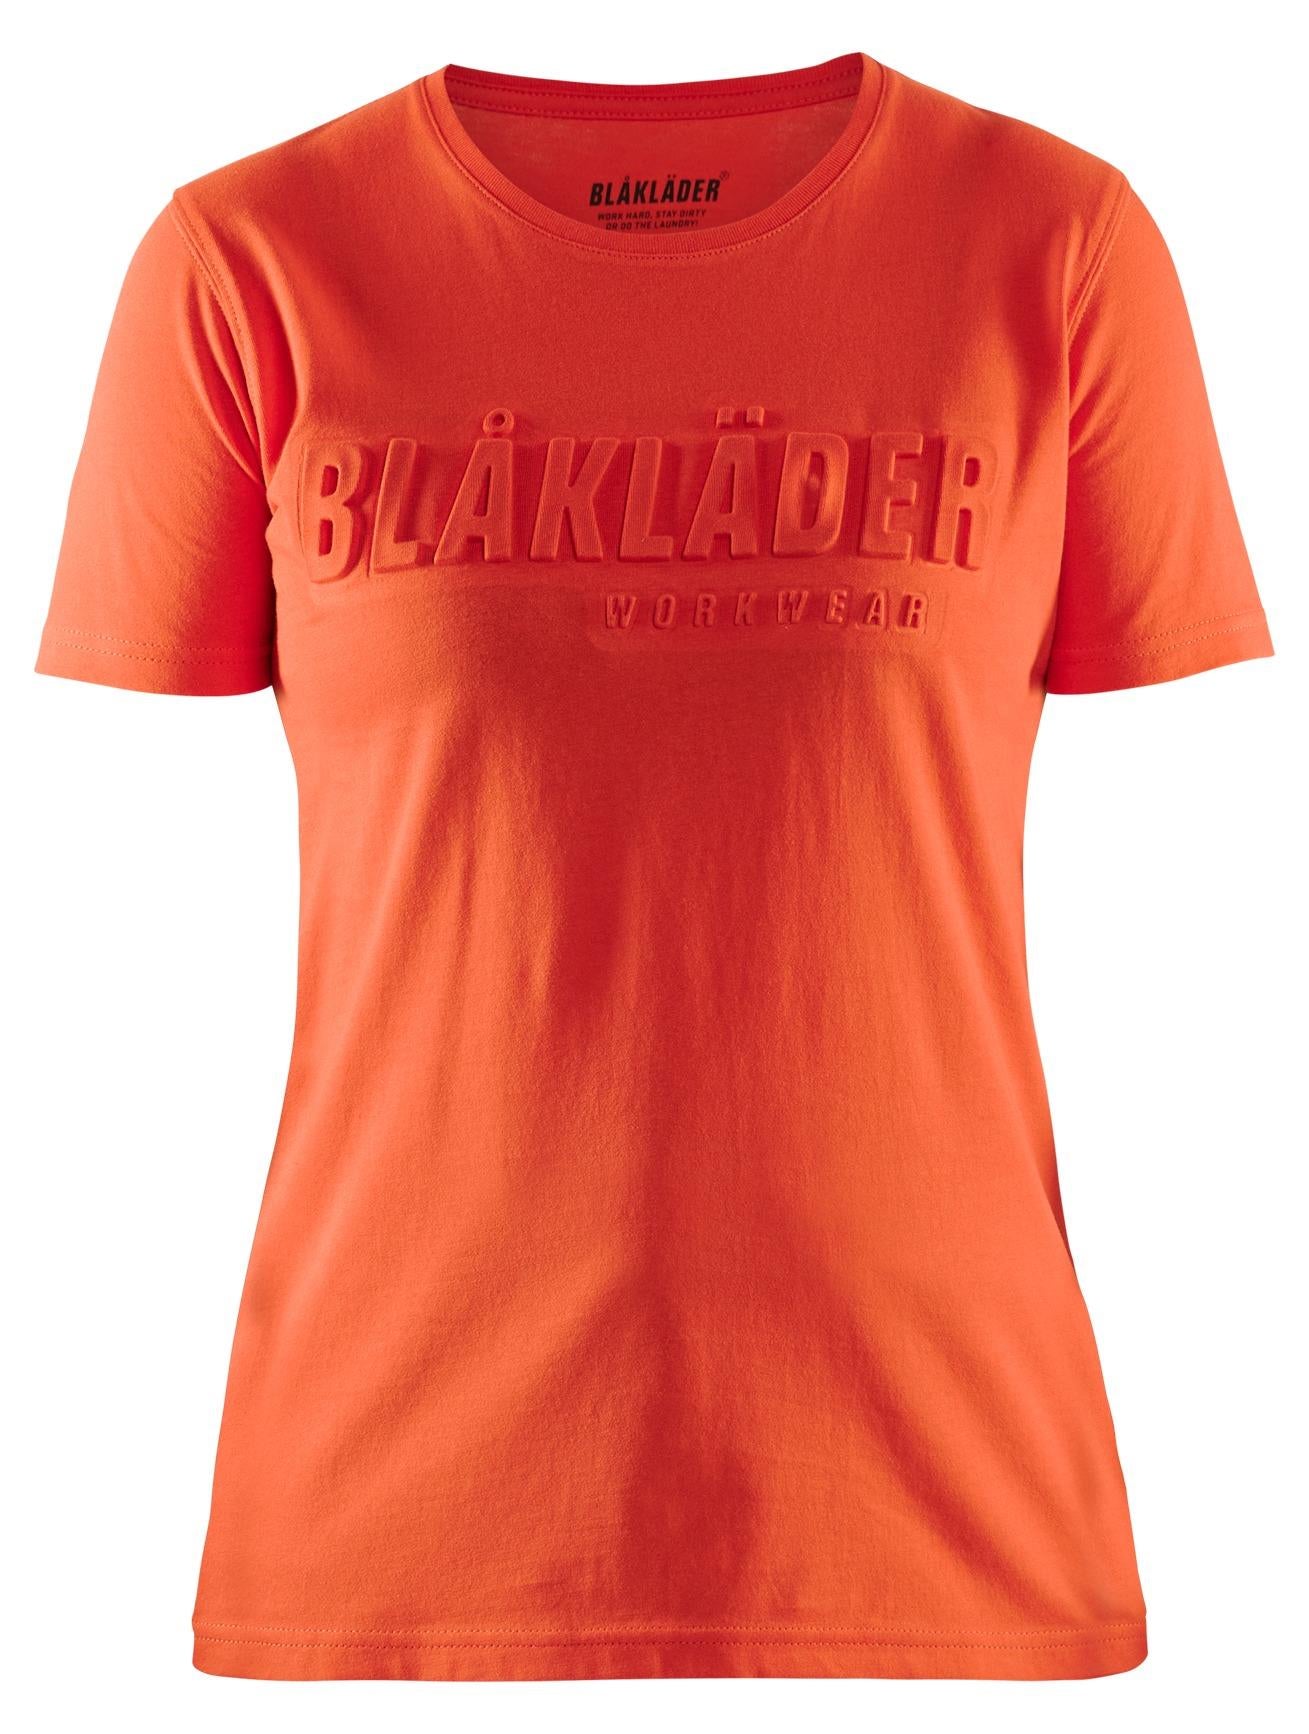 Blaklader 3D-logo orange red women's cotton short-sleeve T-shirt #3431